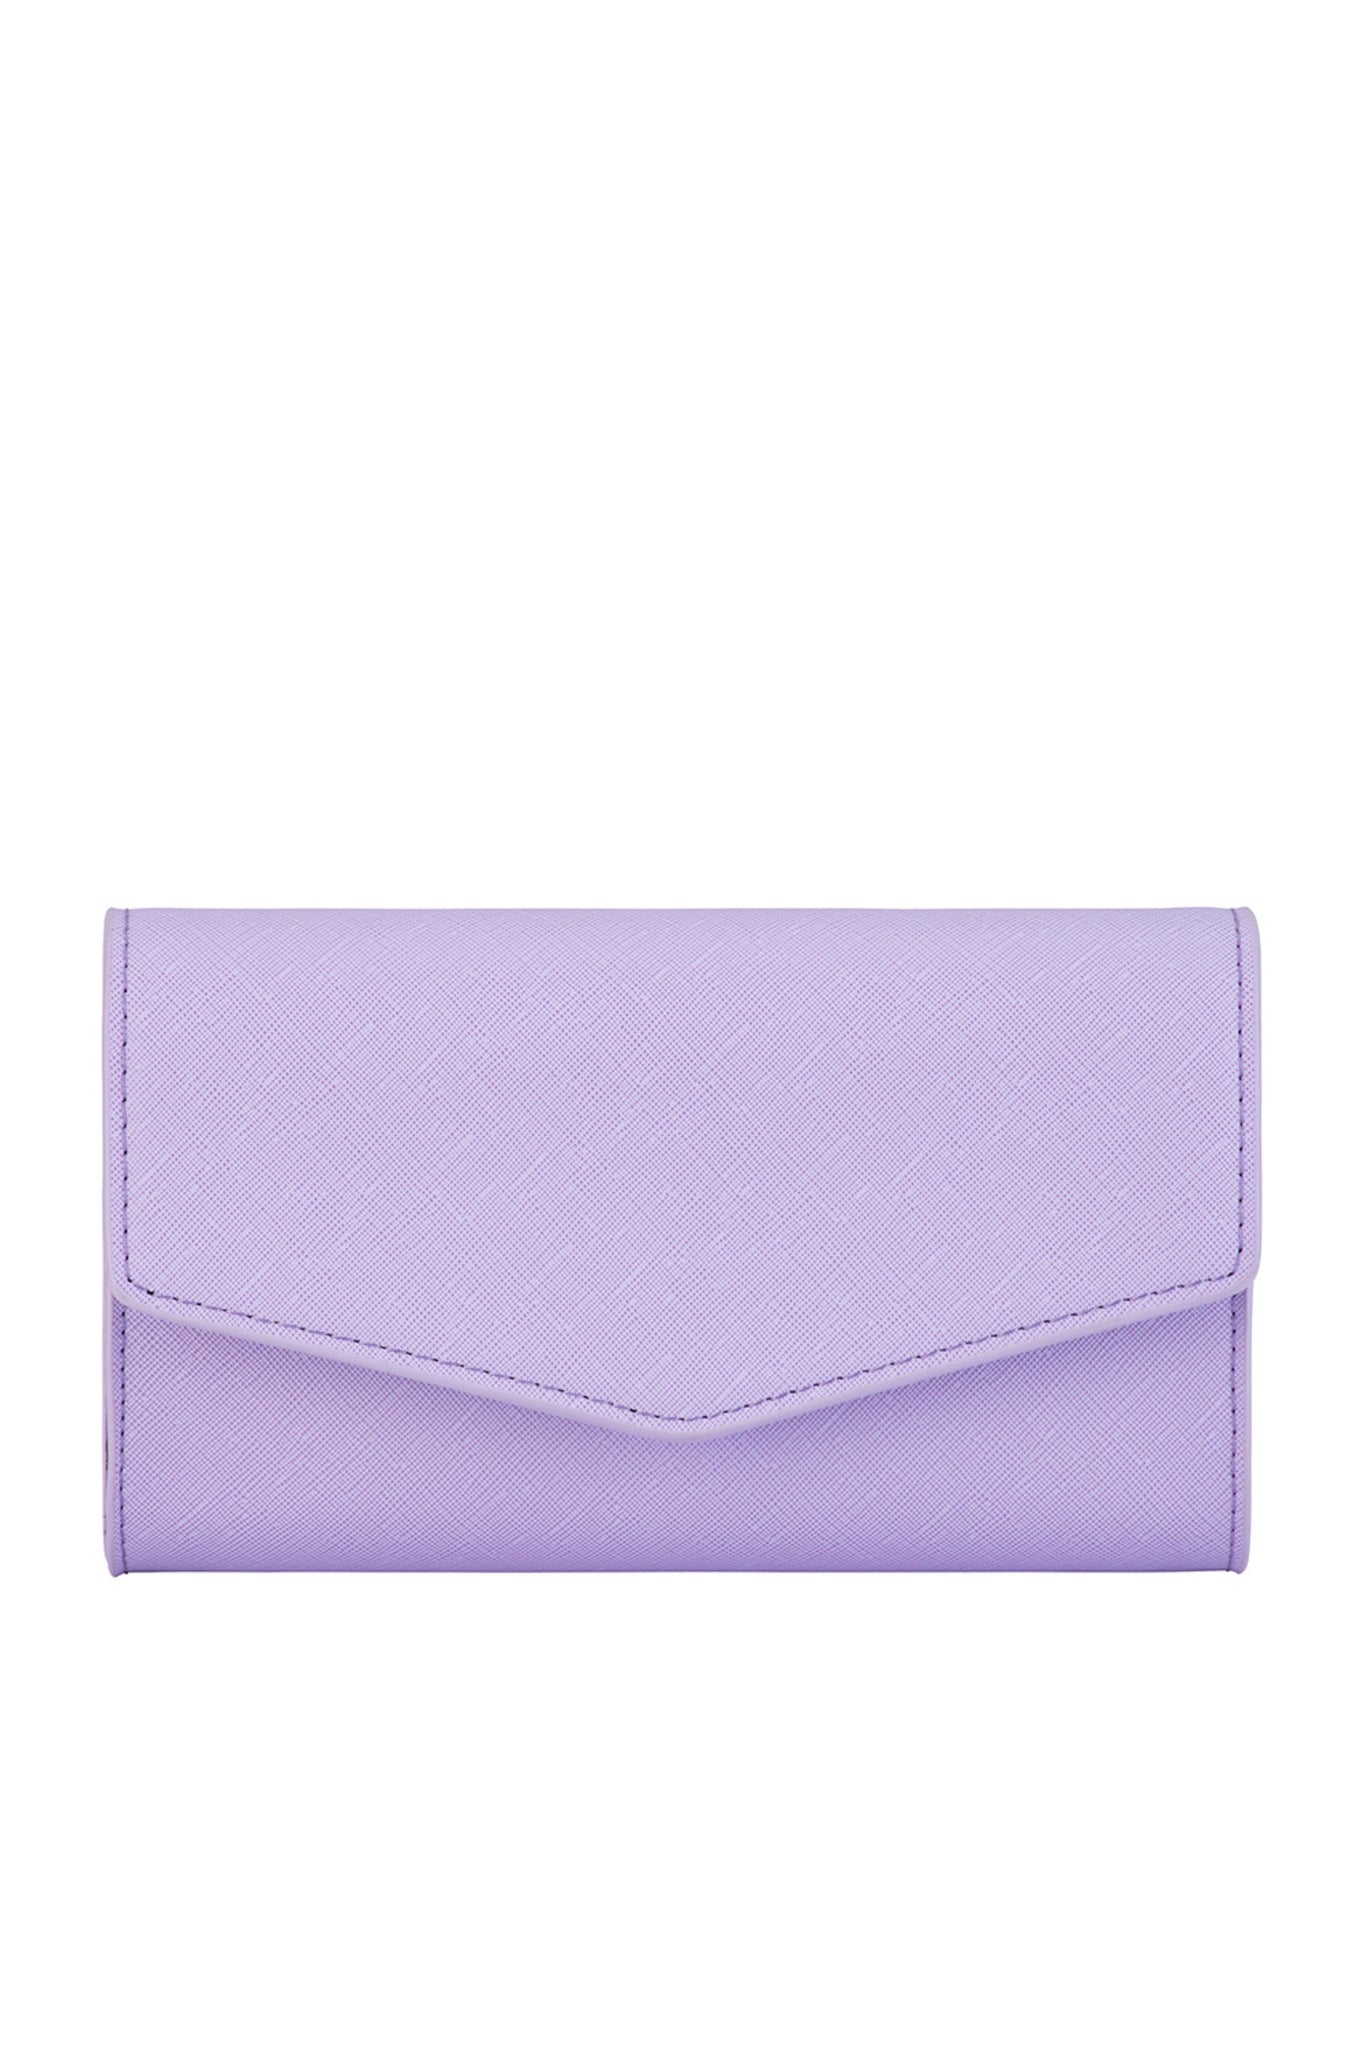 Nic Envelope Clutch - Lilac